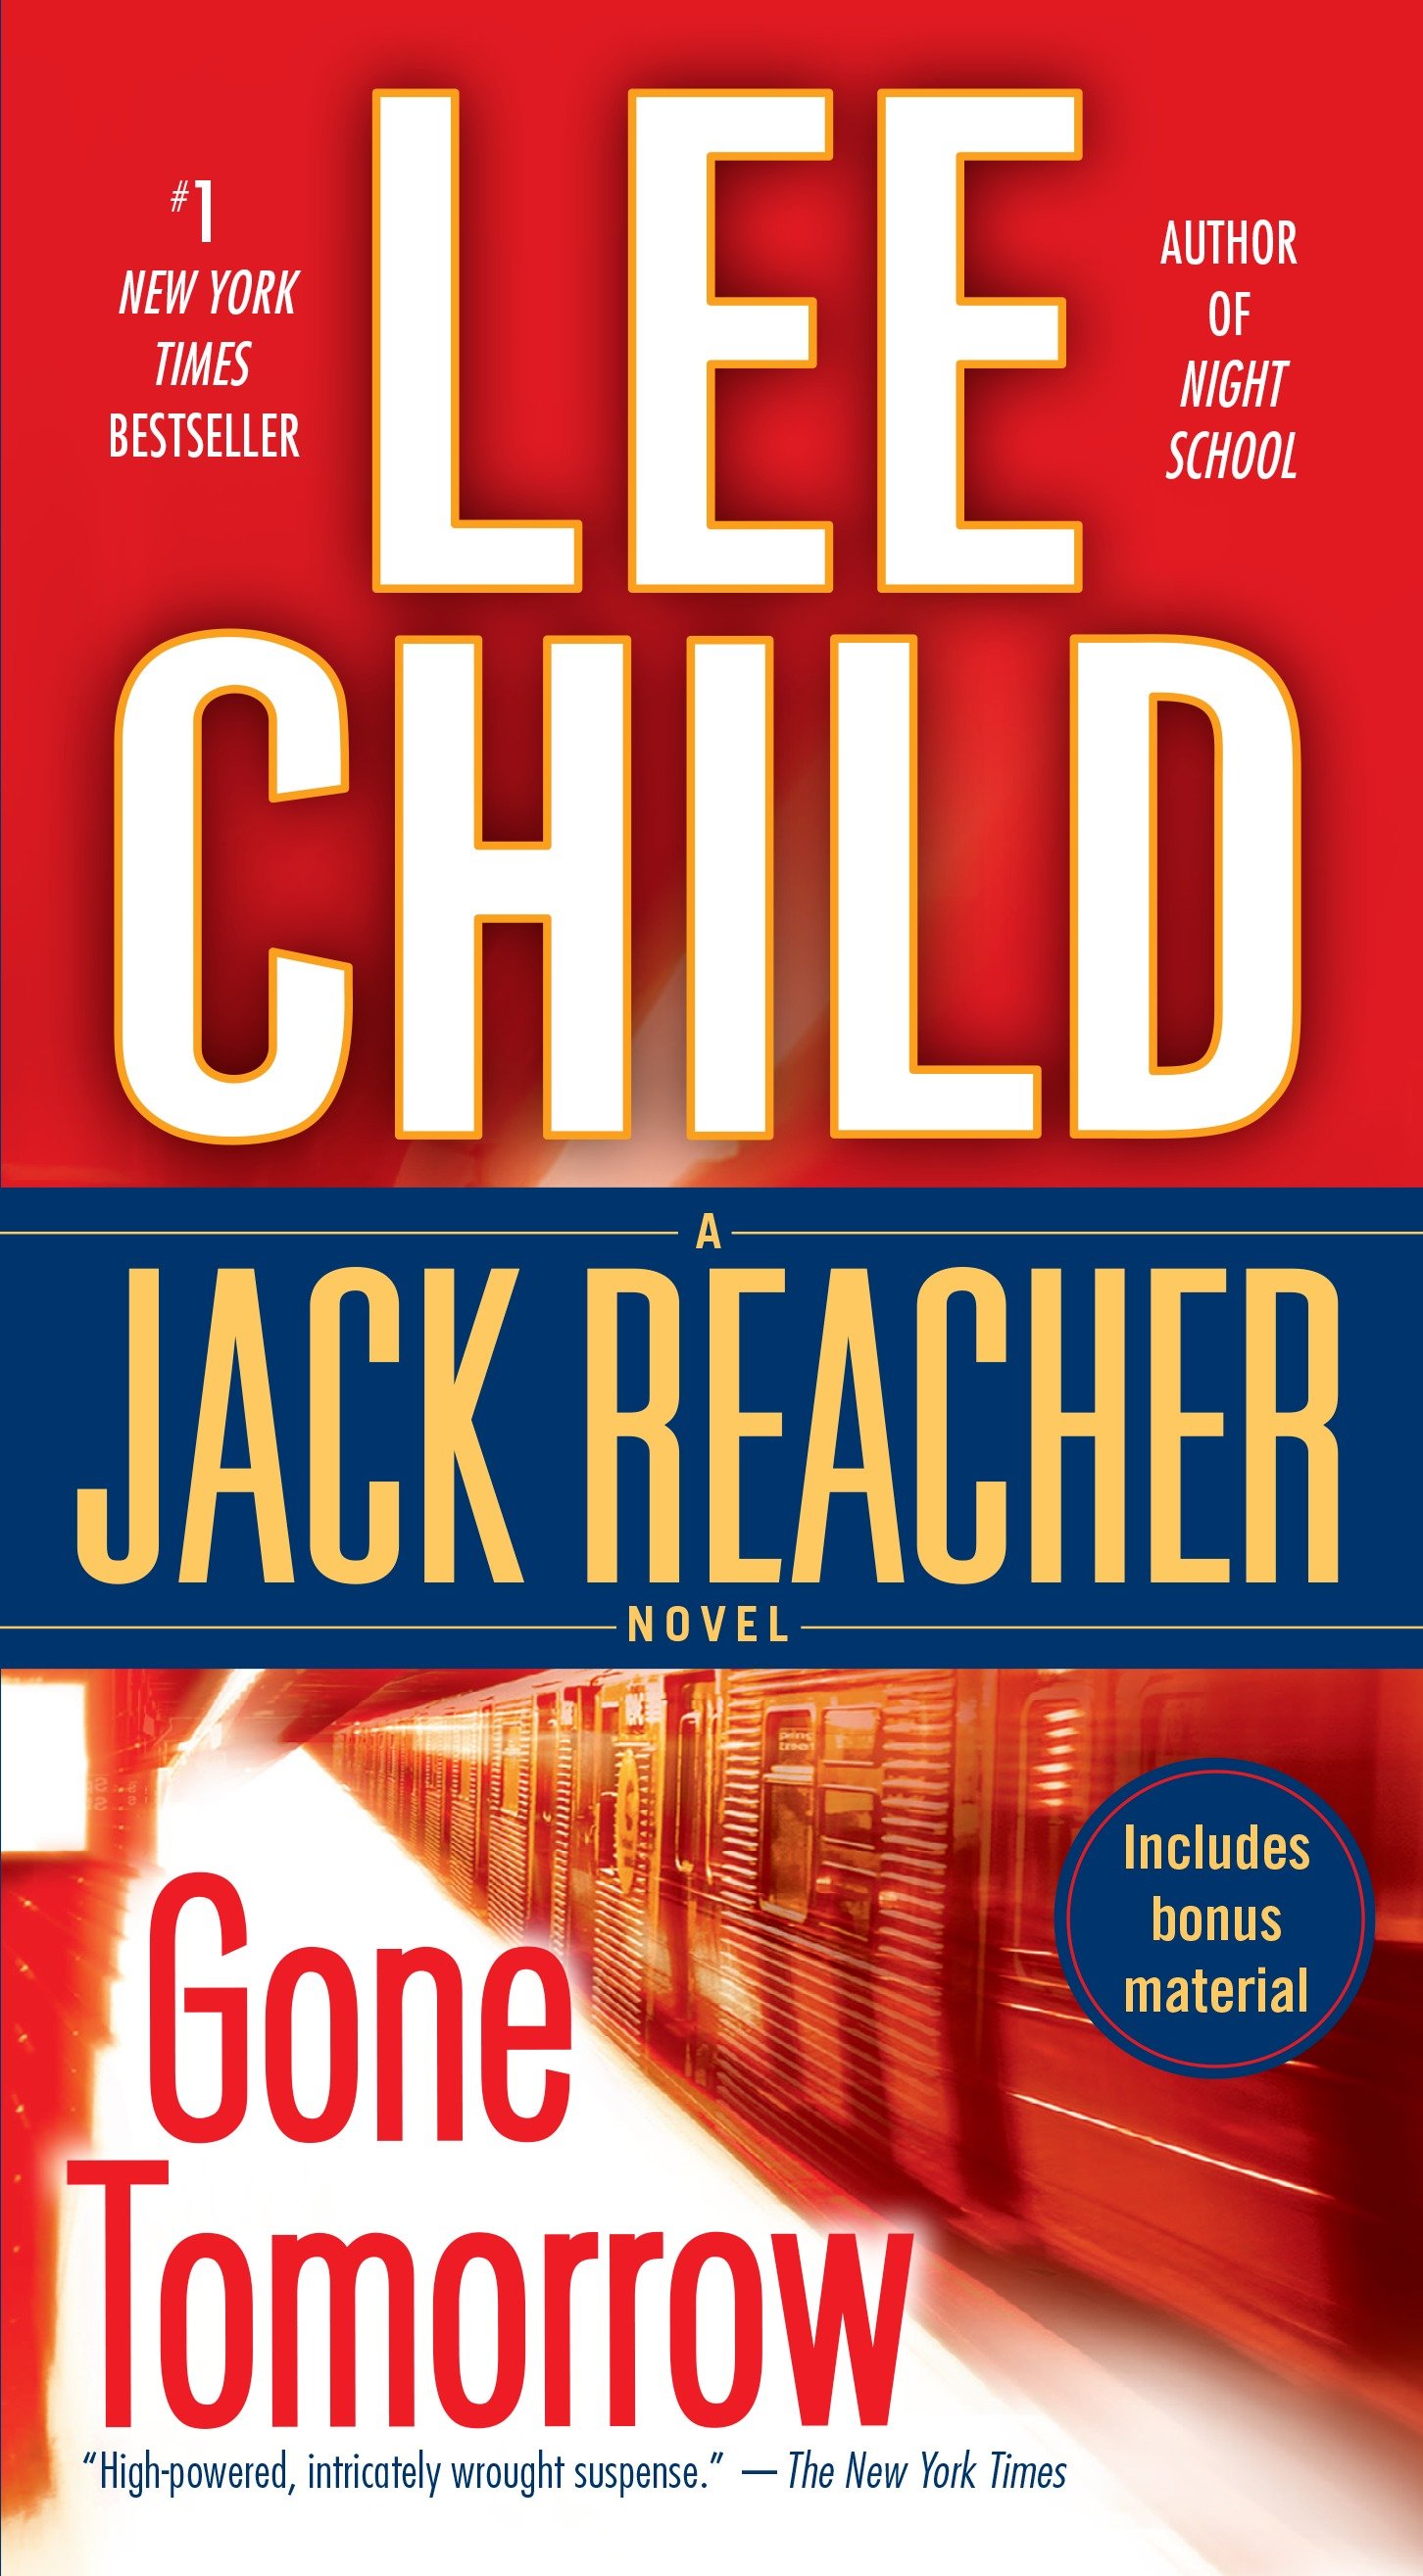 Gone tomorrow a Jack Reacher novel cover image